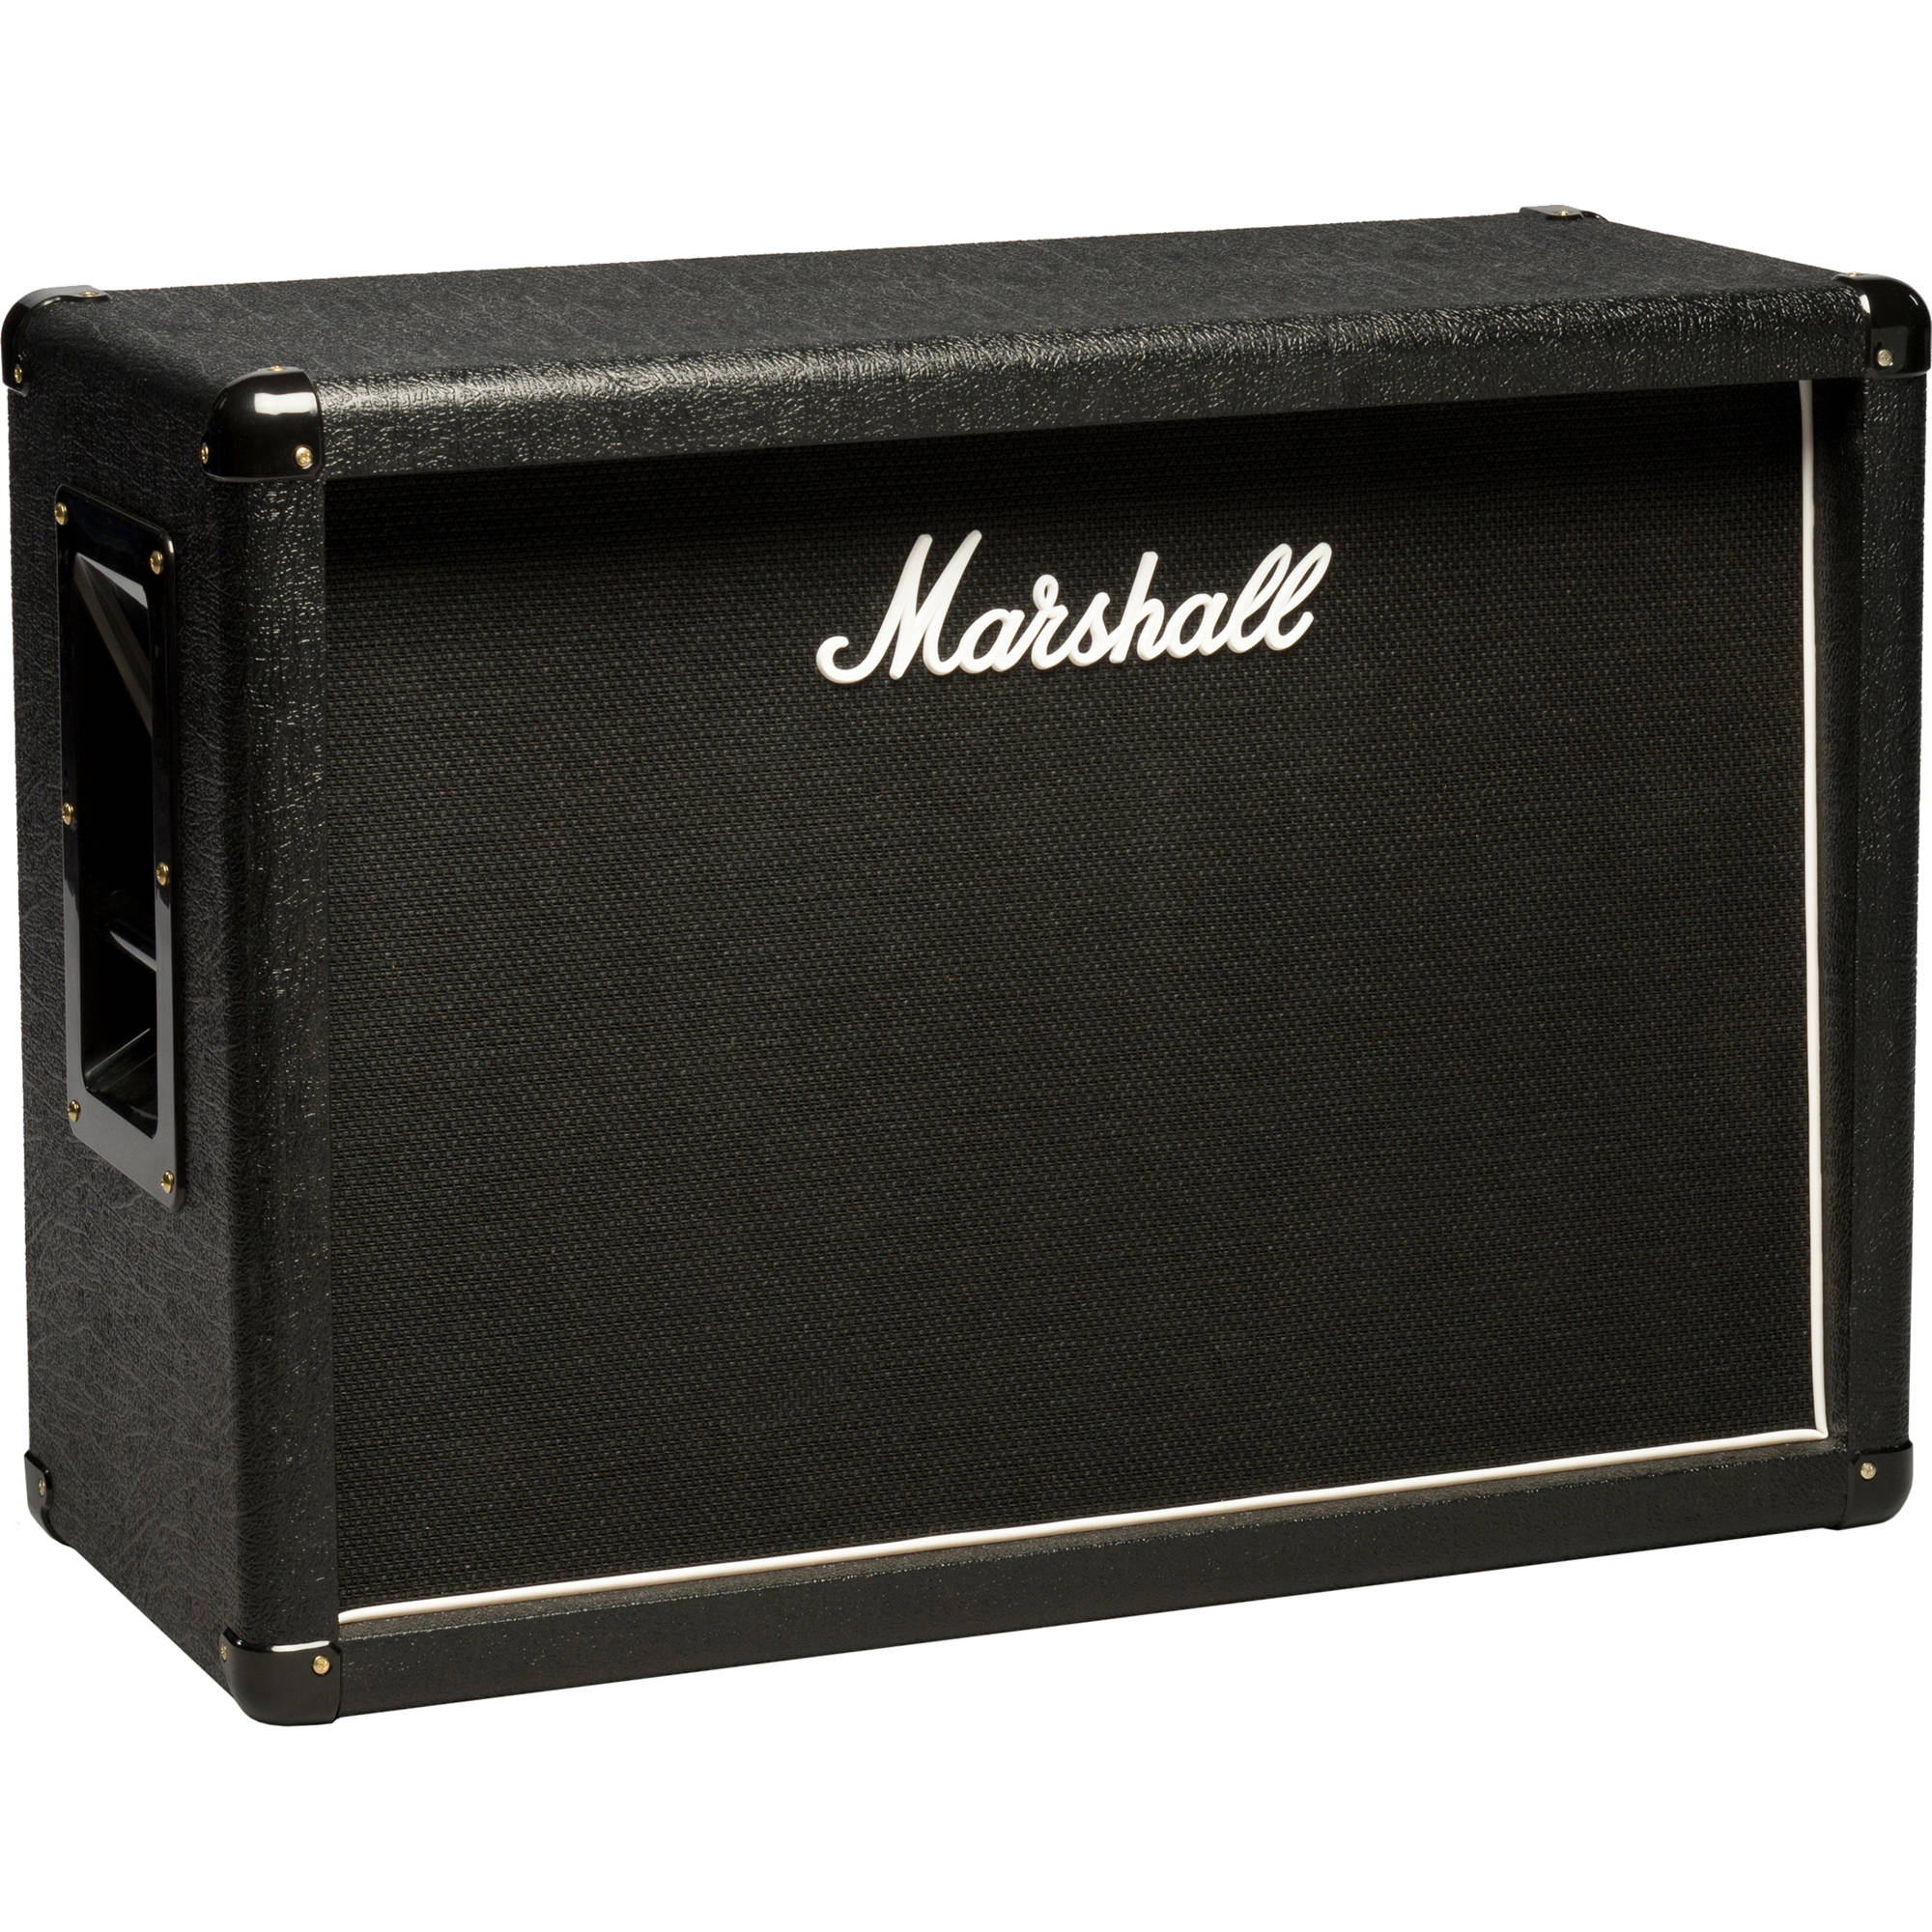 Marshall Amplification Mx212 2x12 Speaker Mx212 B H